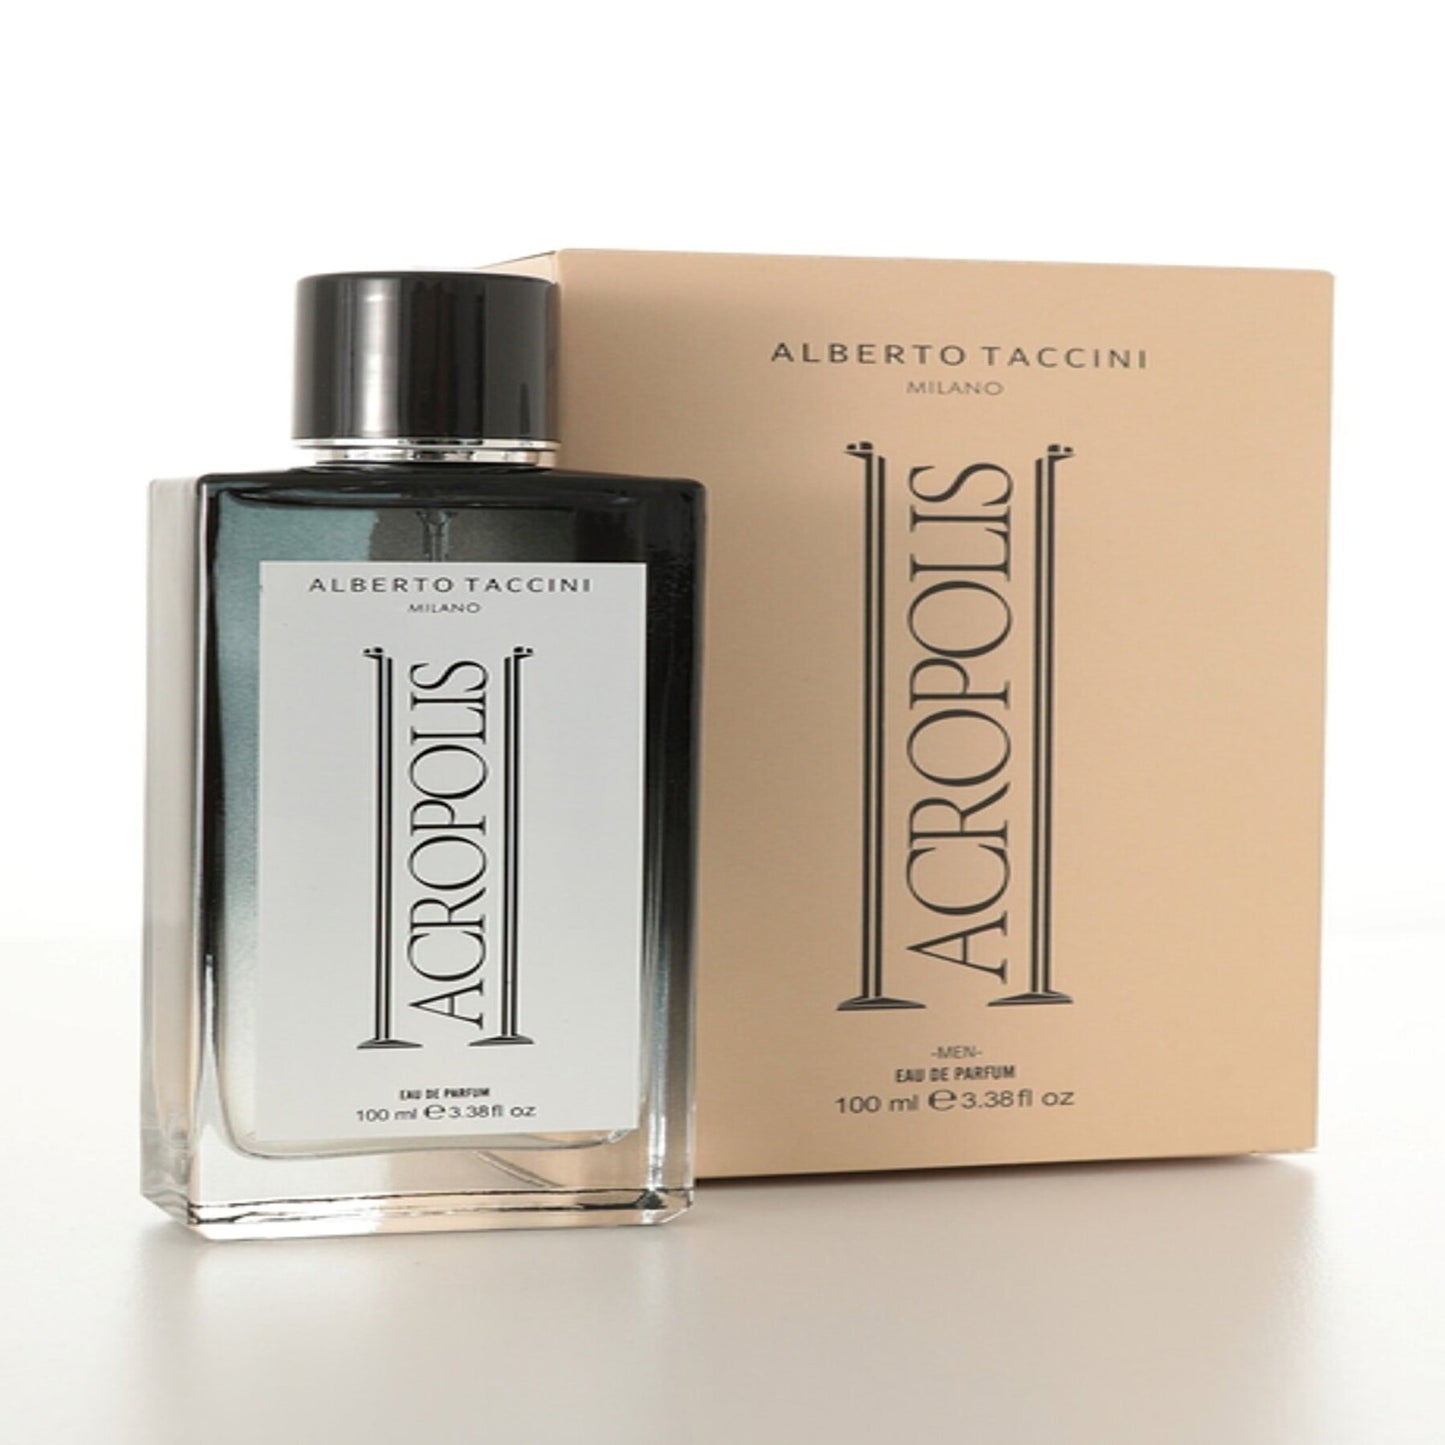 Alberto Taccini Milano Acropole Parfum Homme